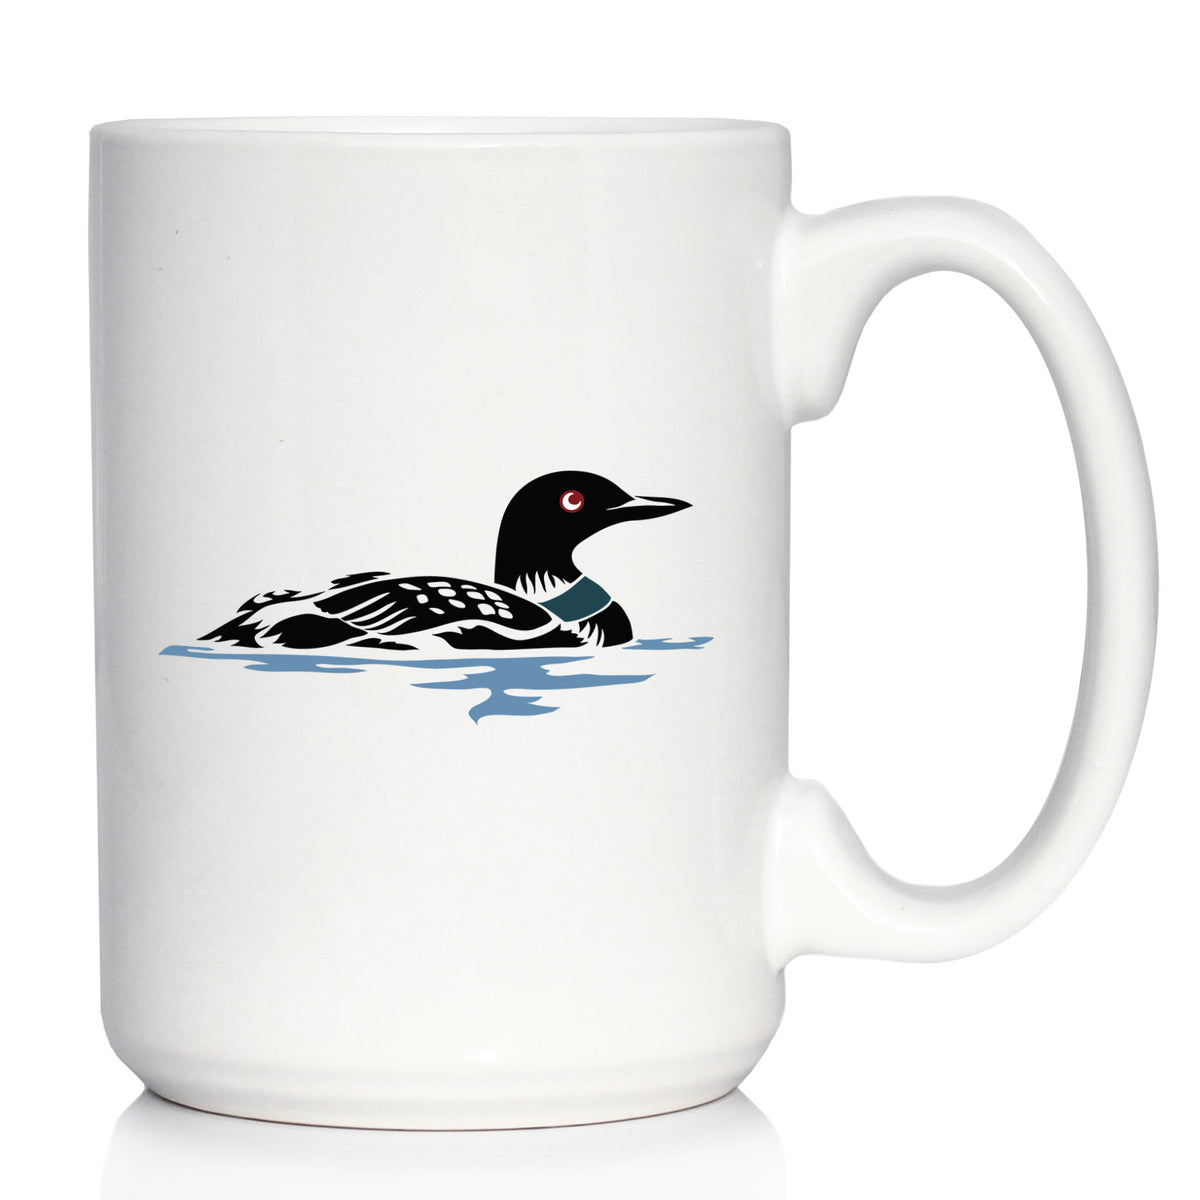 Loon Coffee Mug - Fun Bird Gifts and Lake Decor for Wildlife Lovers